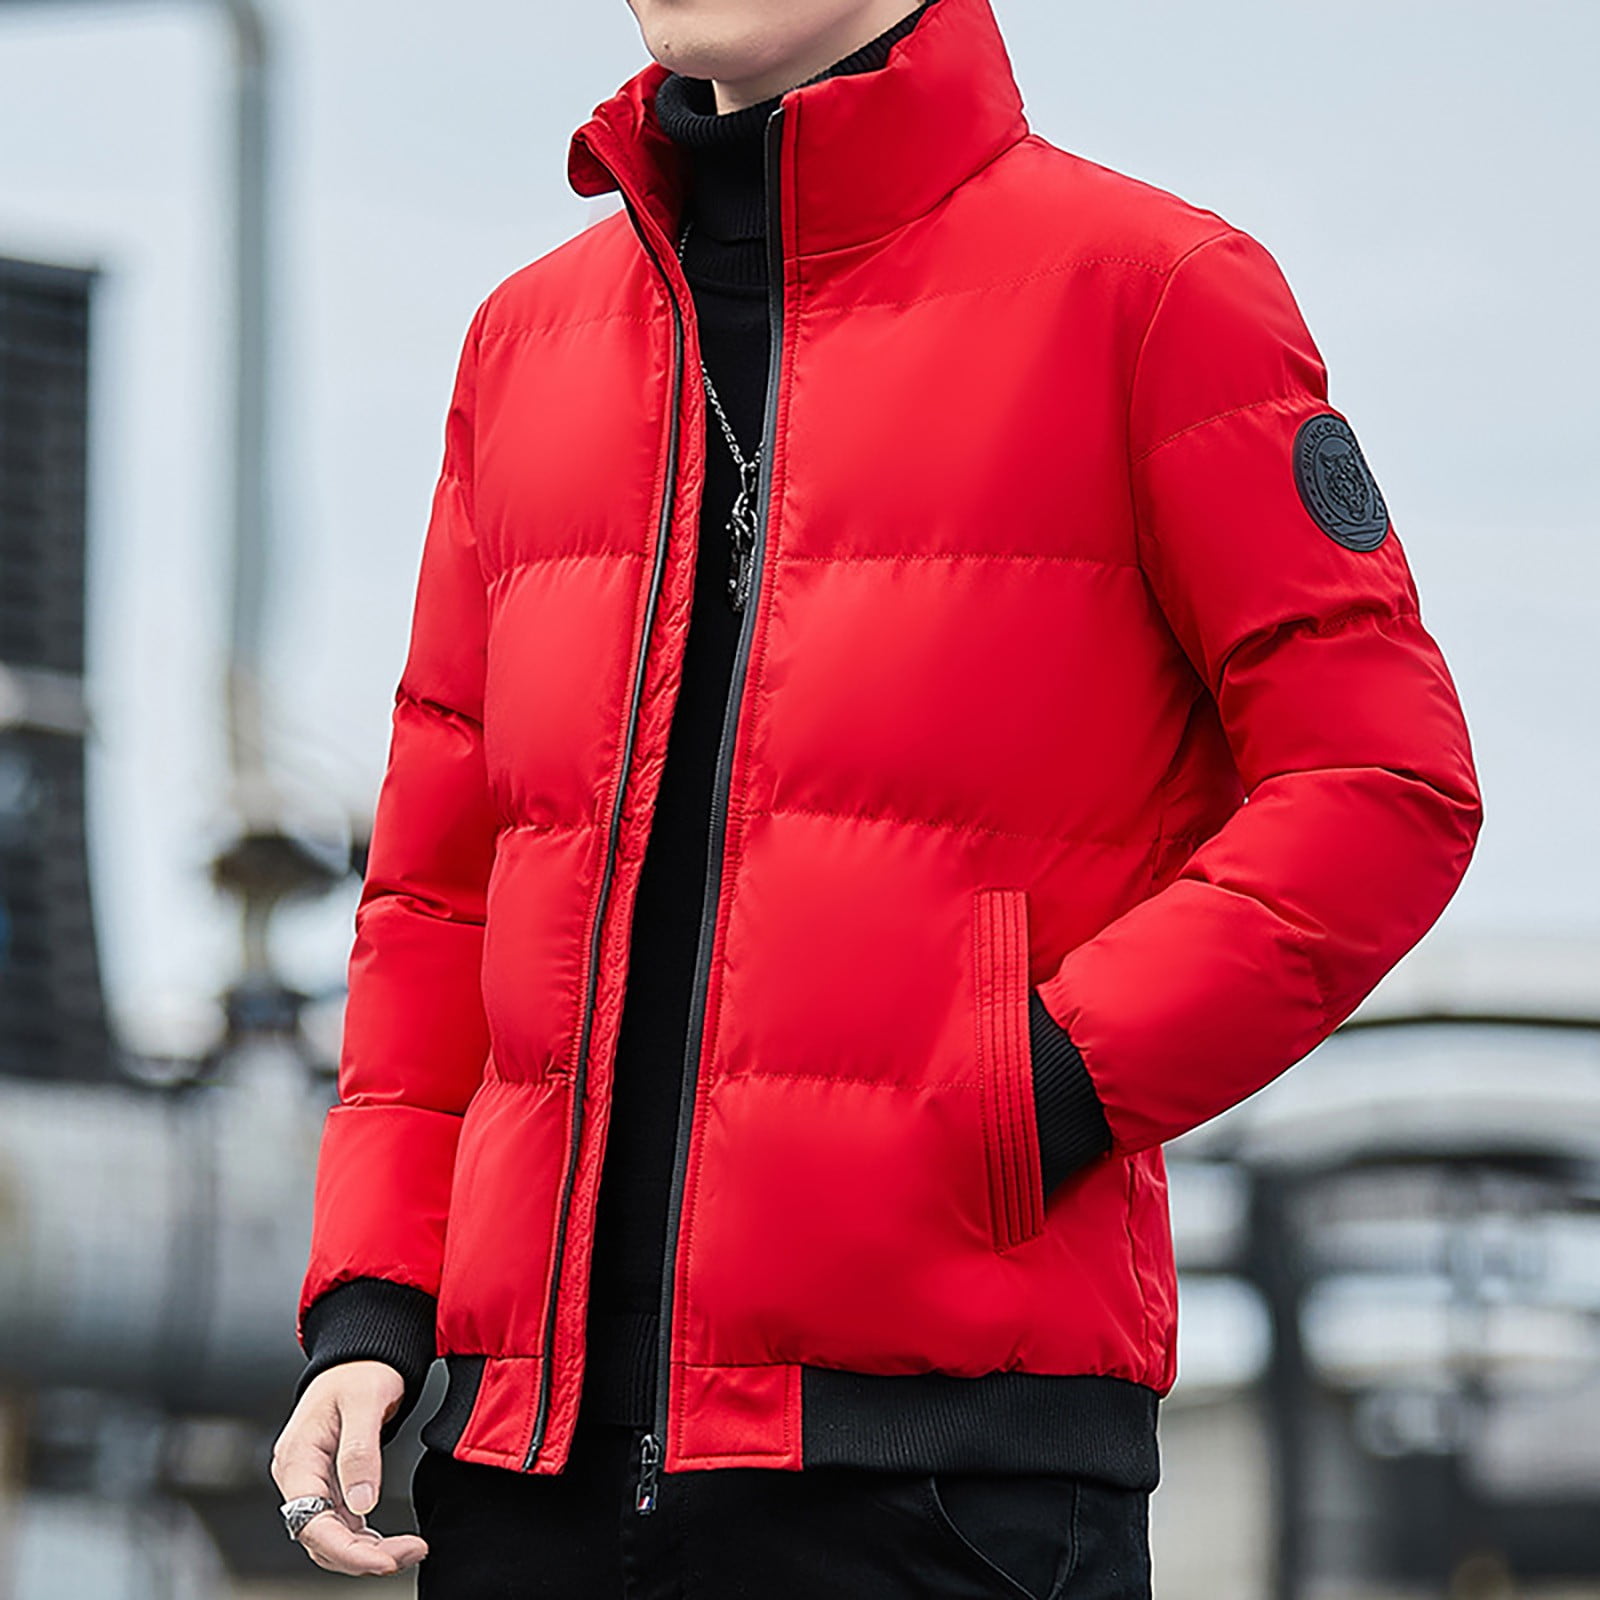 THE WILD Casual Red Men's Winter Zipper Pocket Down Jacket Plus Down Thickened Coat Jacket Tops - Walmart.com